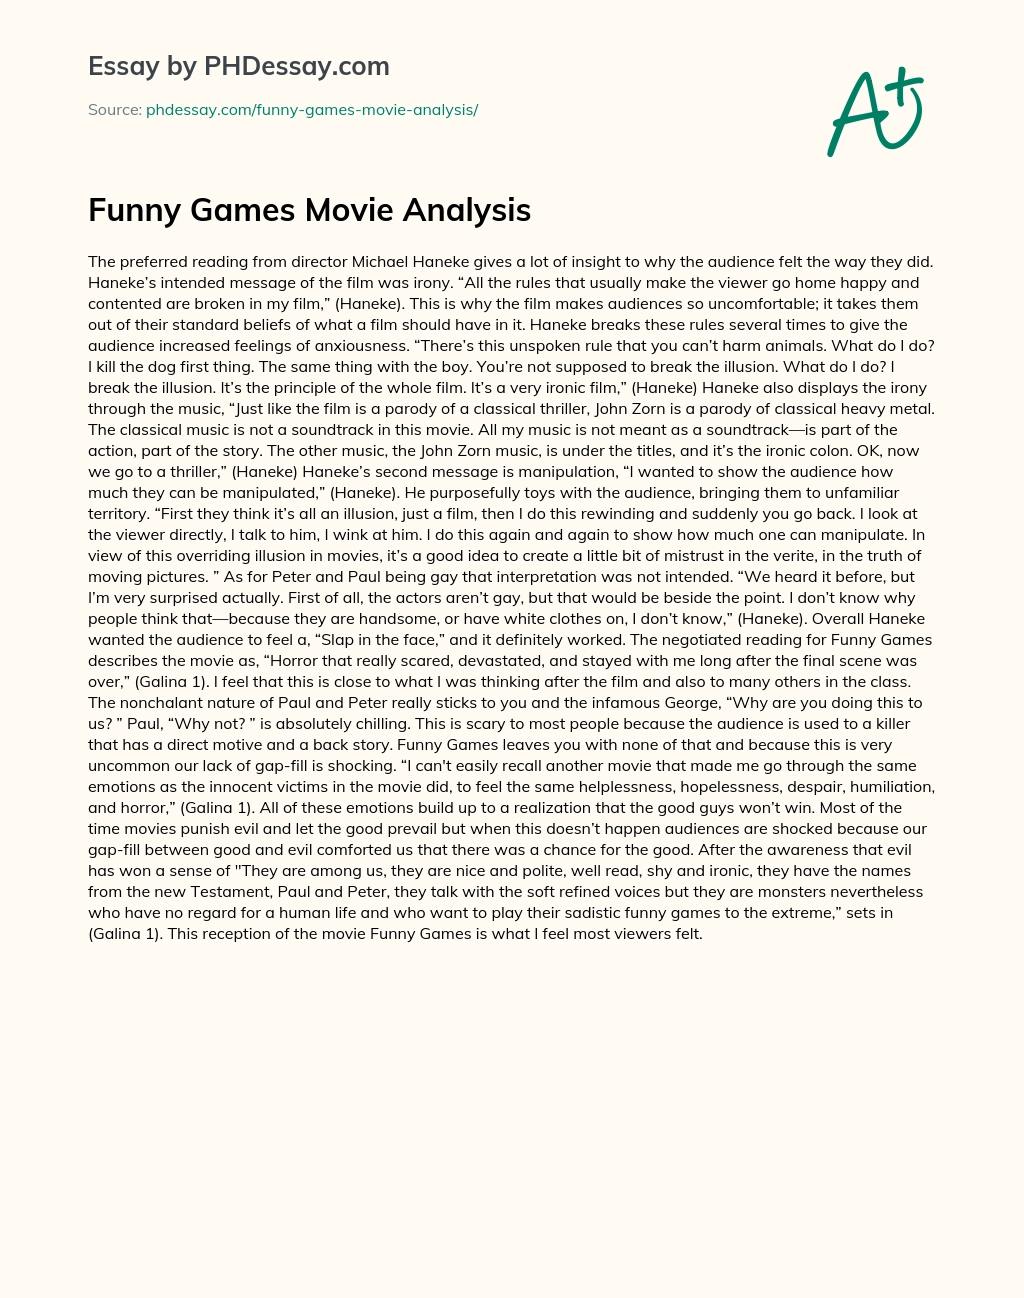 Funny Games Movie Analysis essay